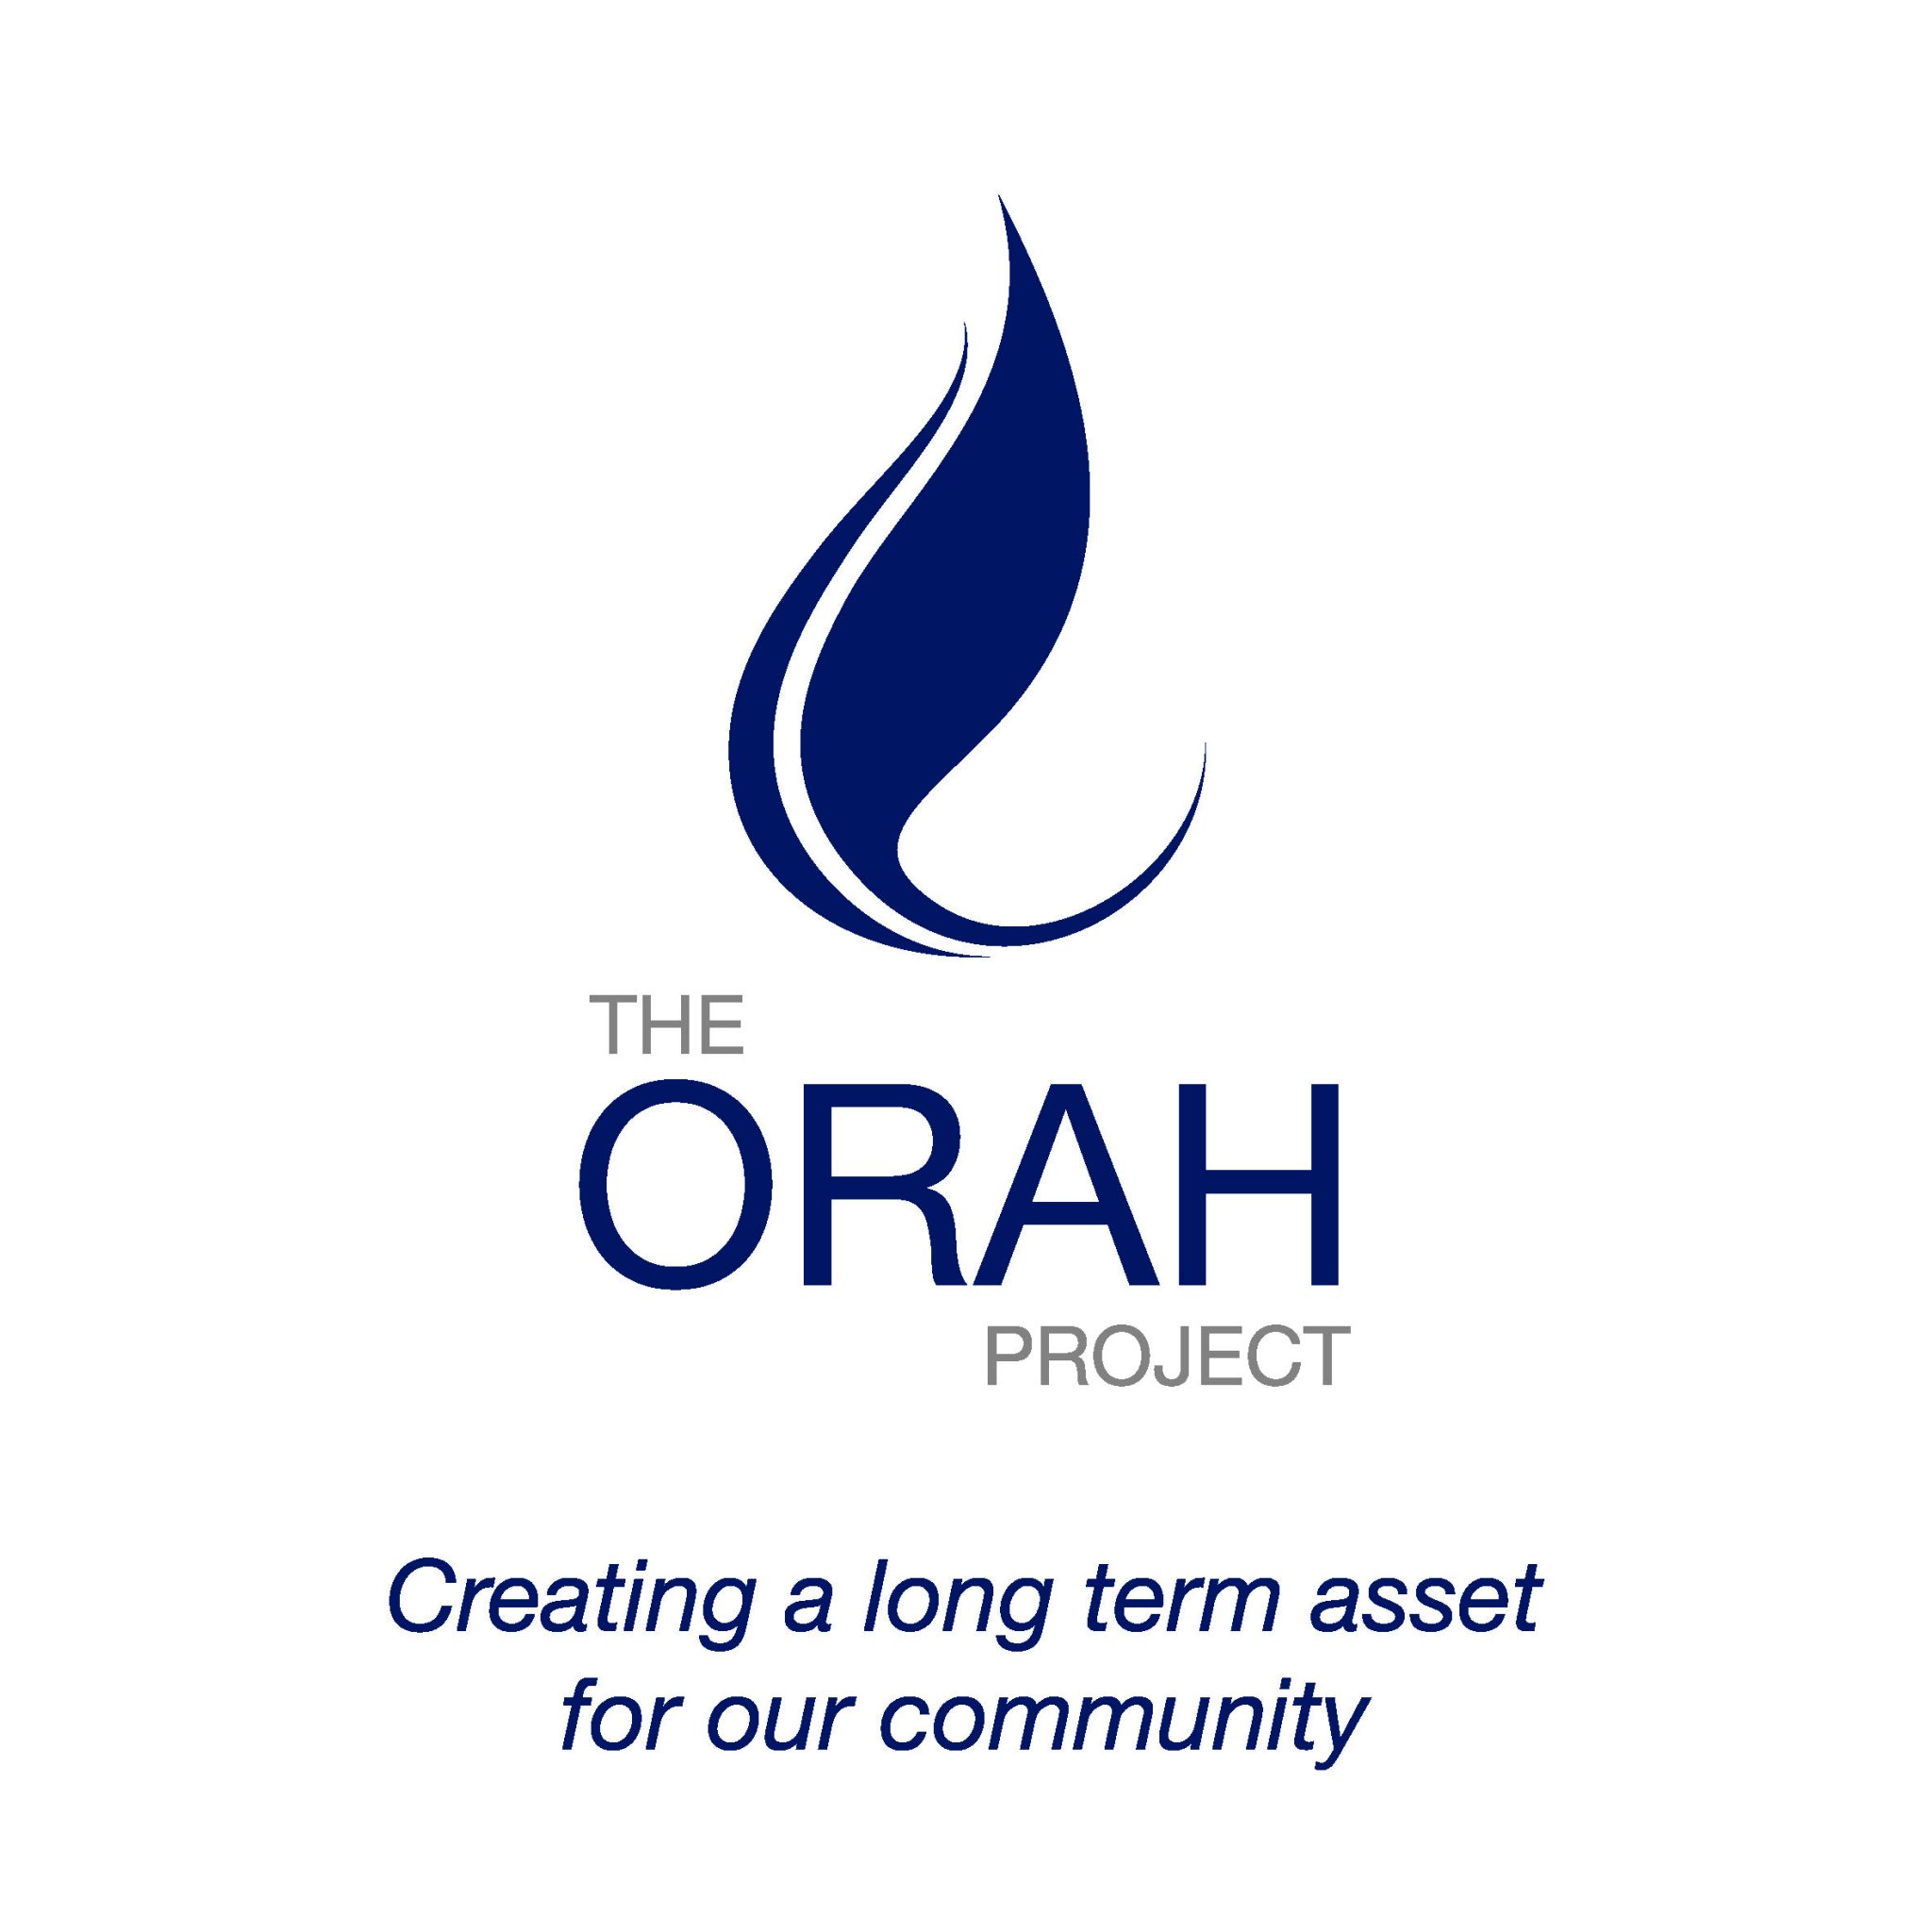 The Orah Project